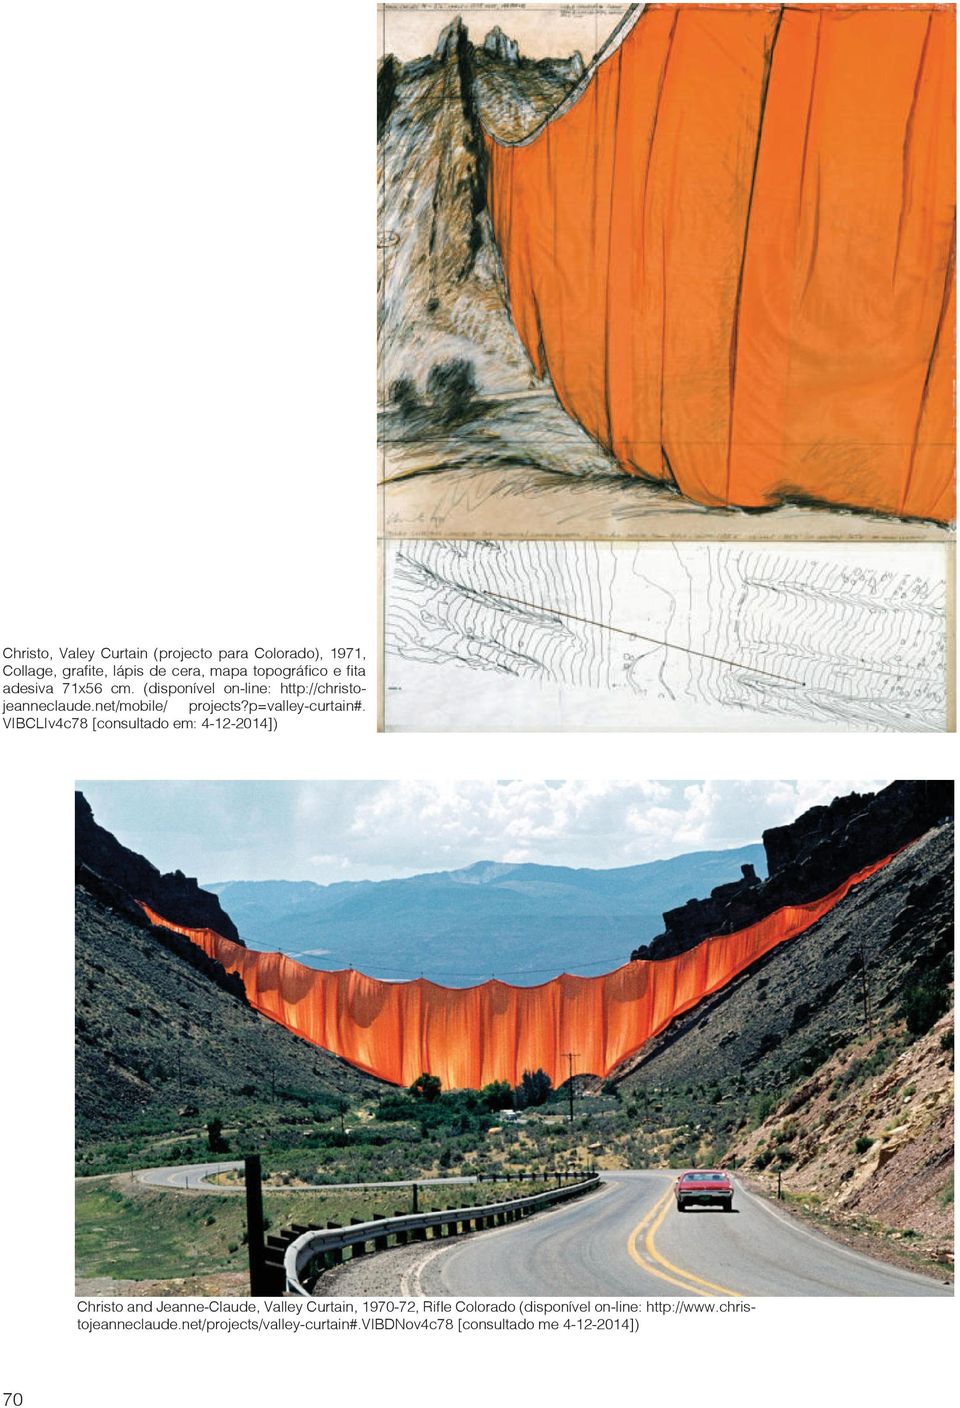 VIBCLIv4c78 [consultado em: 4-12-2014]) Christo and Jeanne-Claude, Valley Curtain, 1970-72, Rifle Colorado